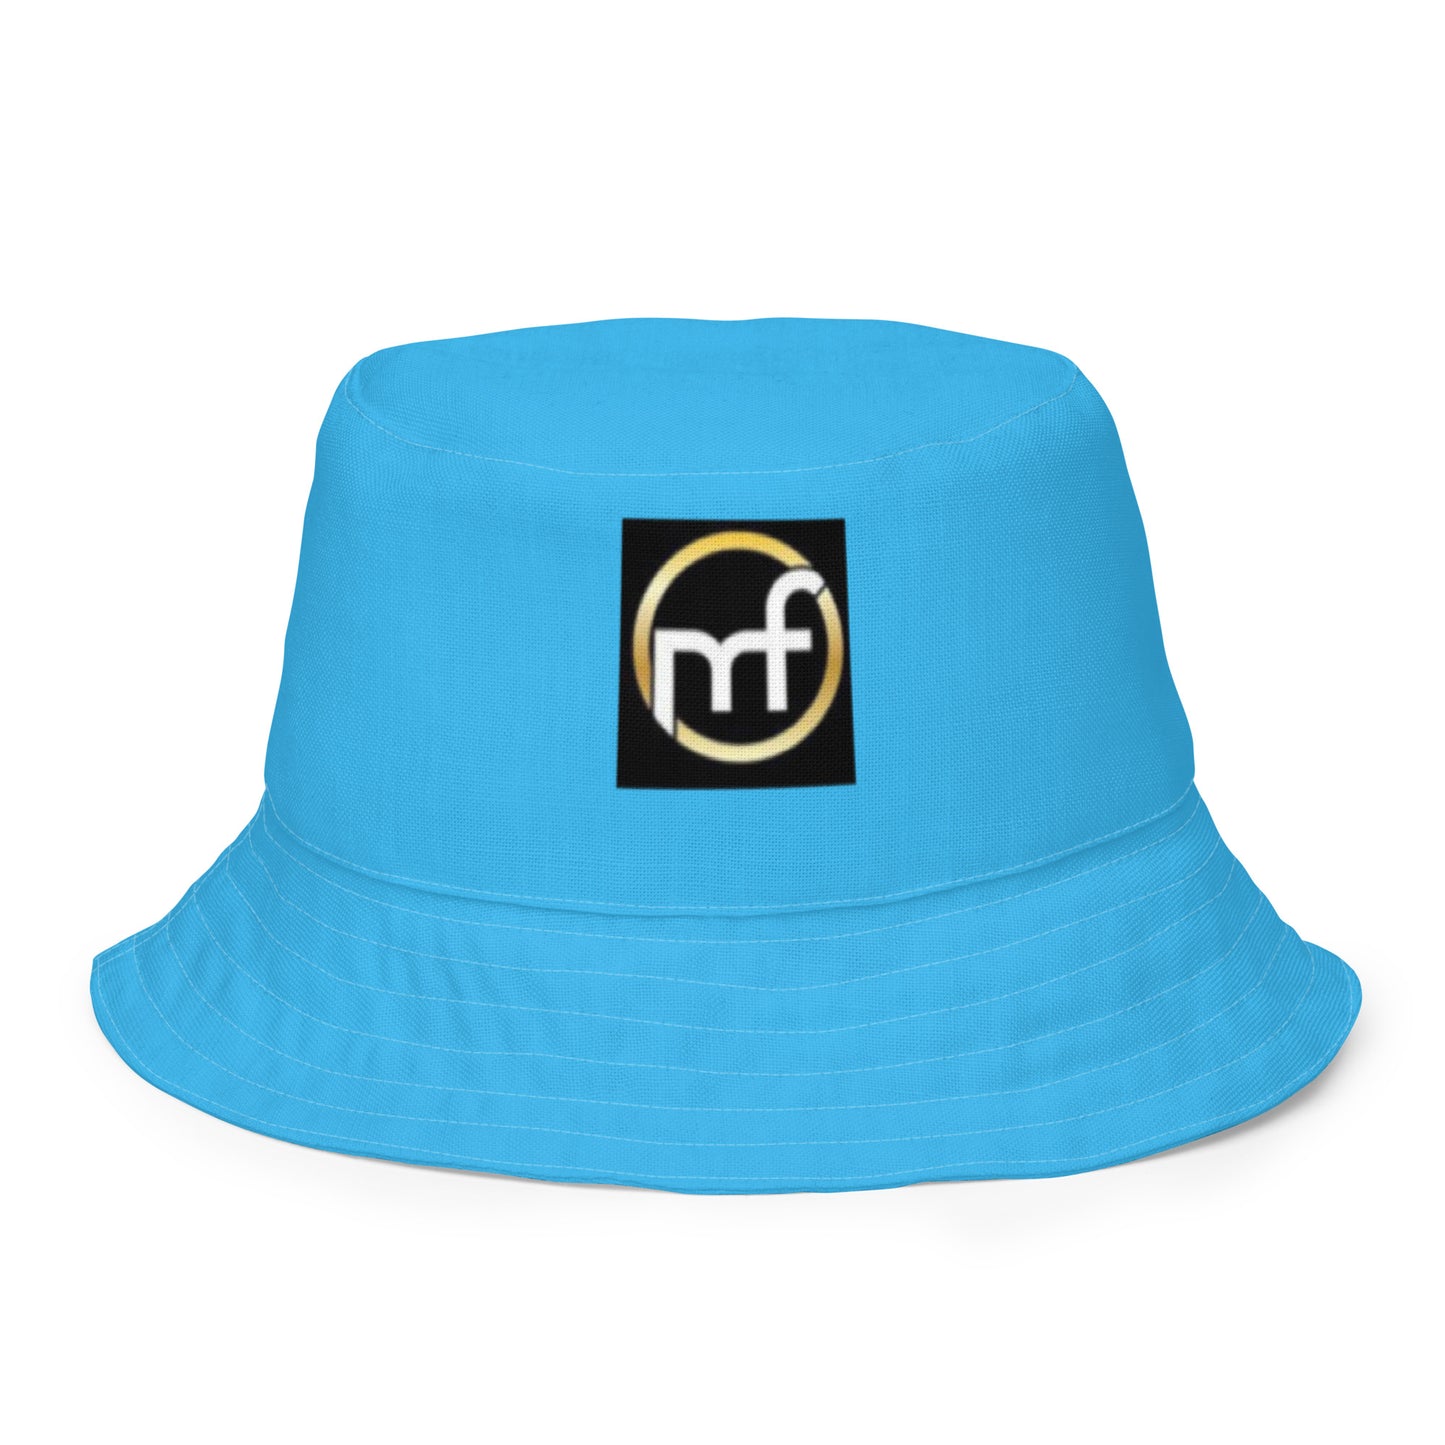 YCSWU bucket hat - blue